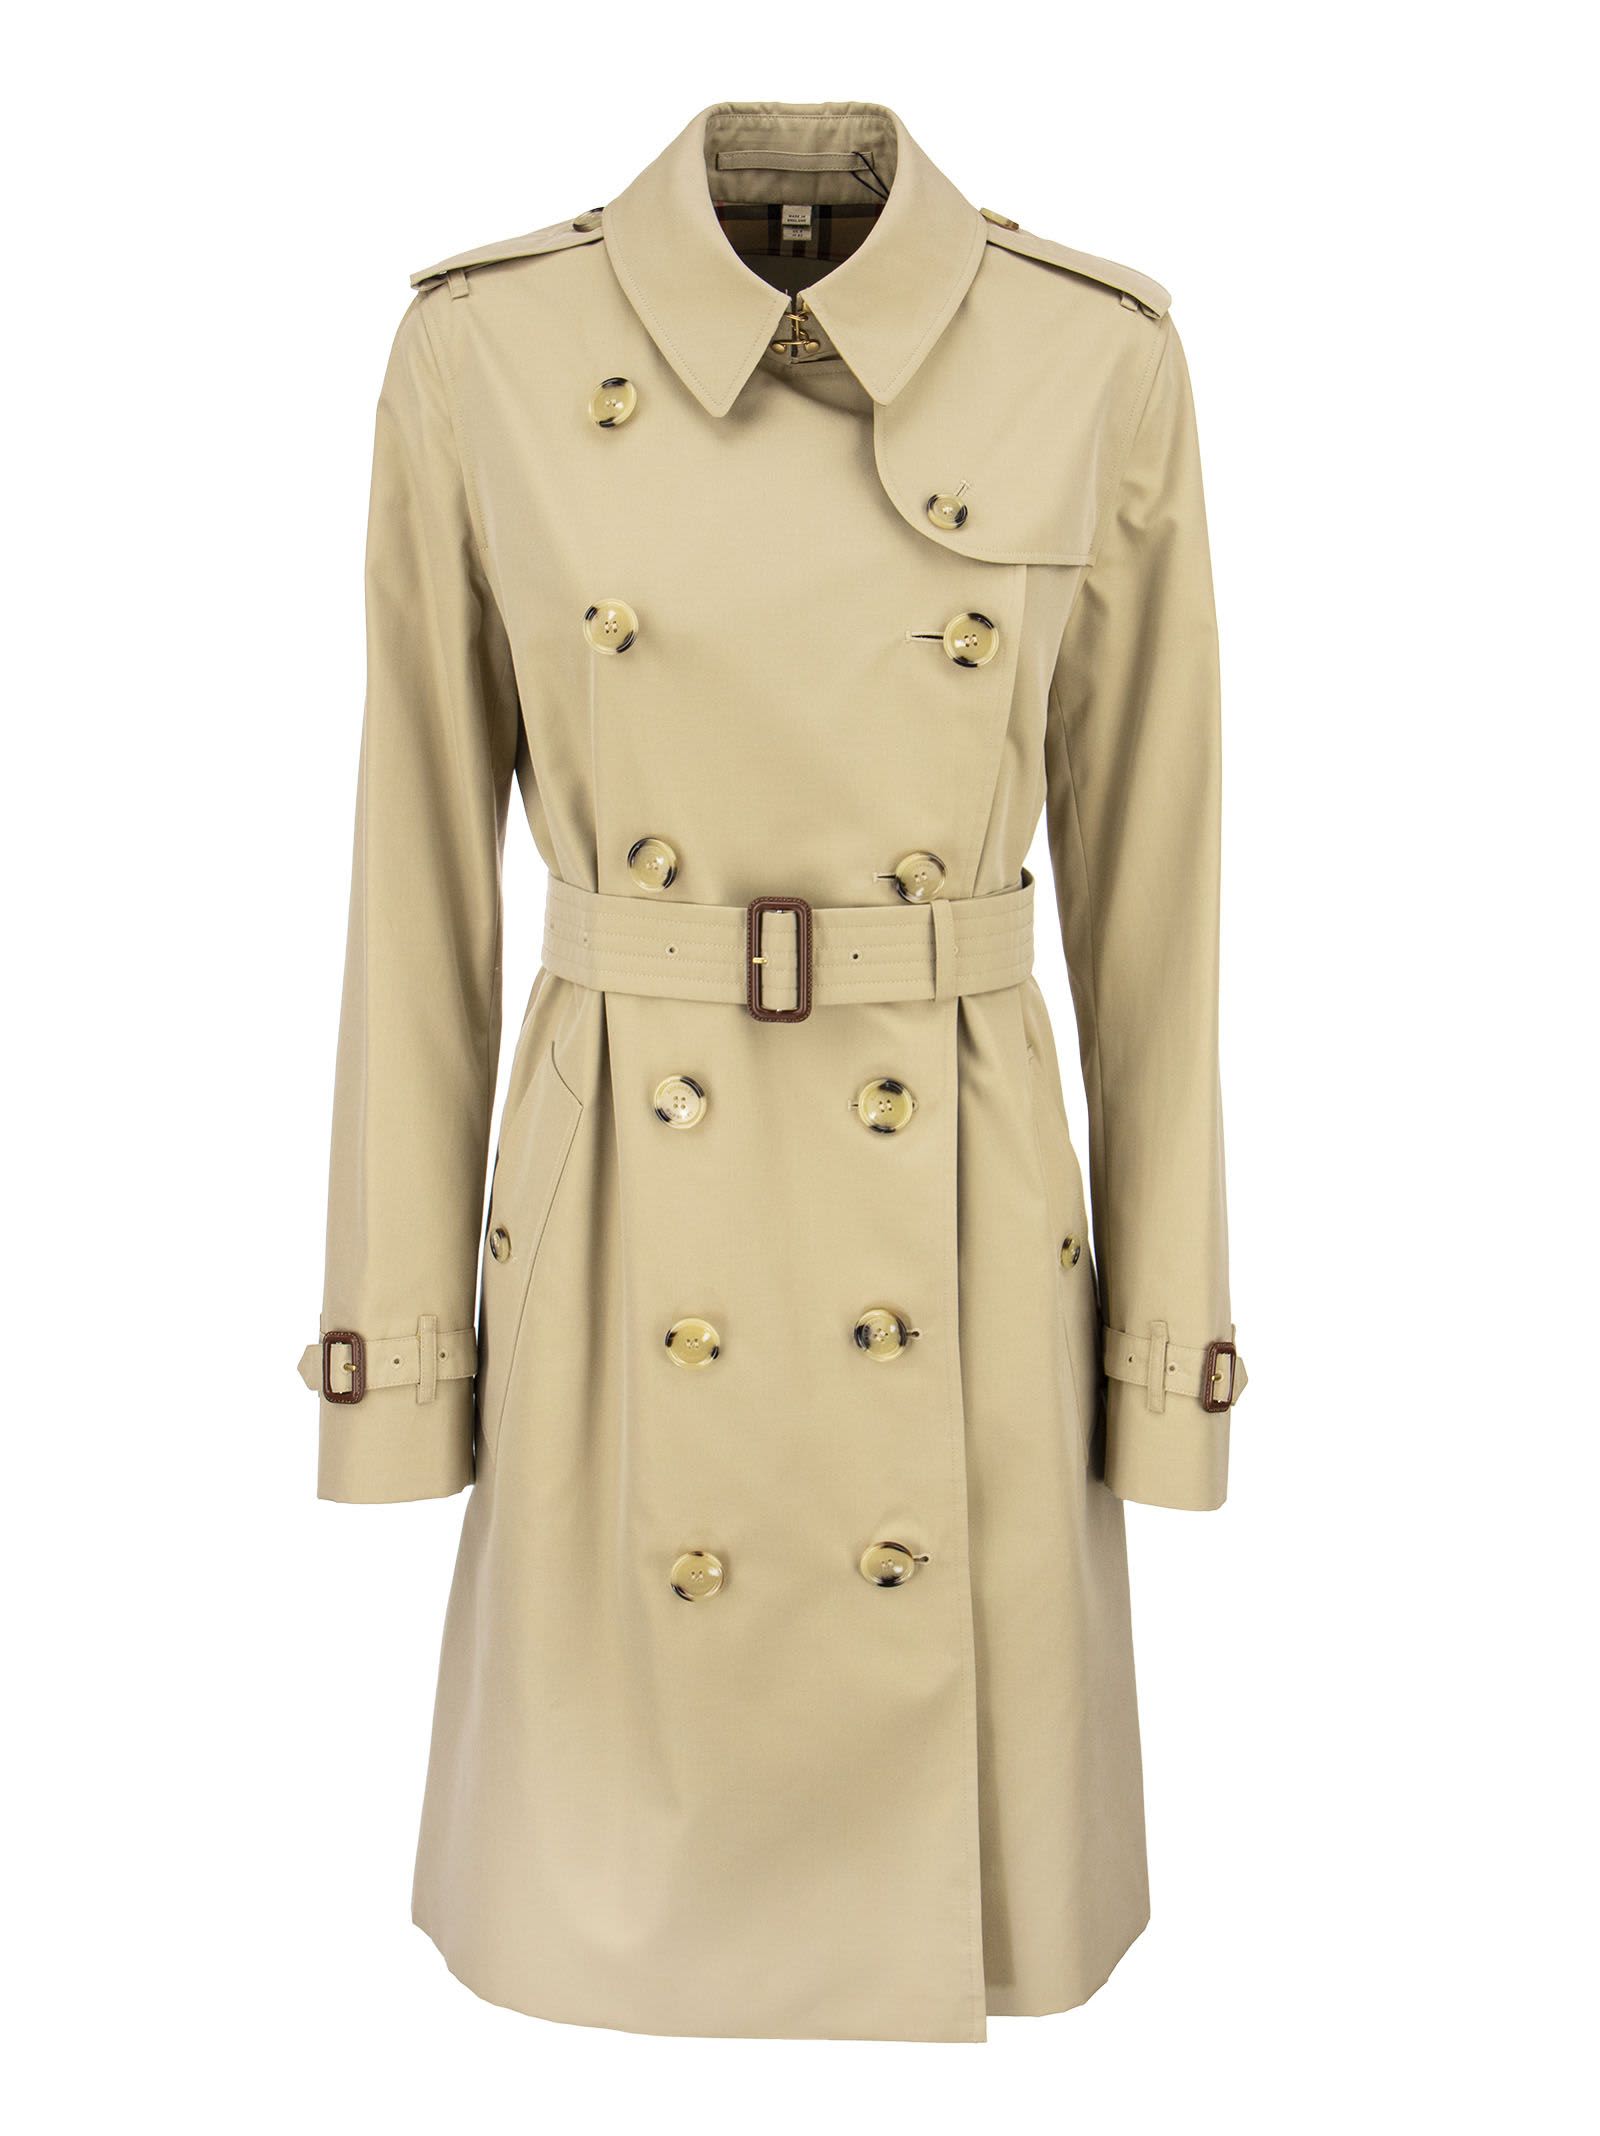 Burberry Kensington 2 – The Mid-length Kensington Trench Coat